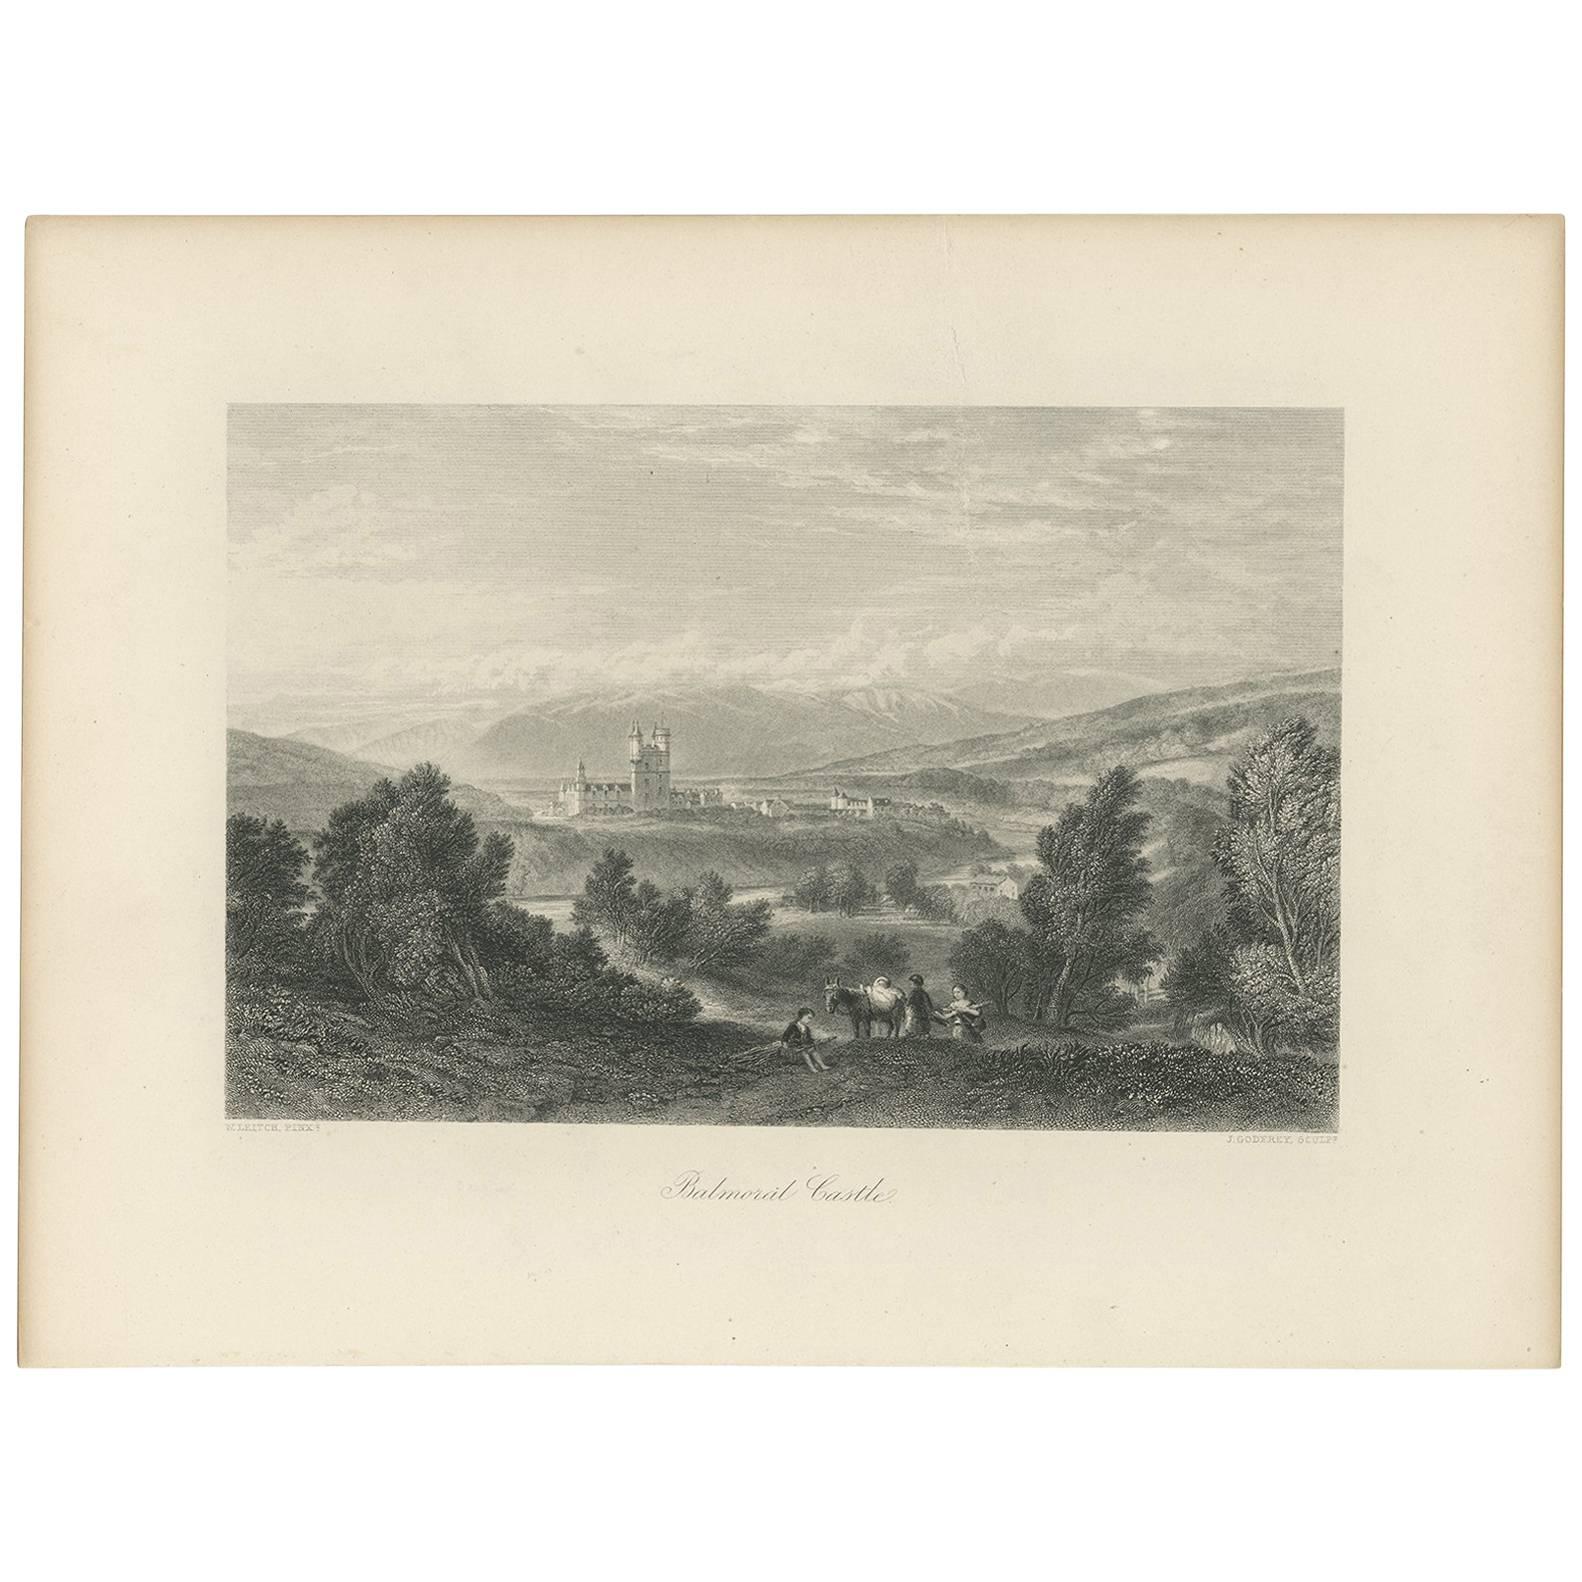 Antique Print of Balmoral Castle in Royal Deeside, Aberdeenshire, circa 1875